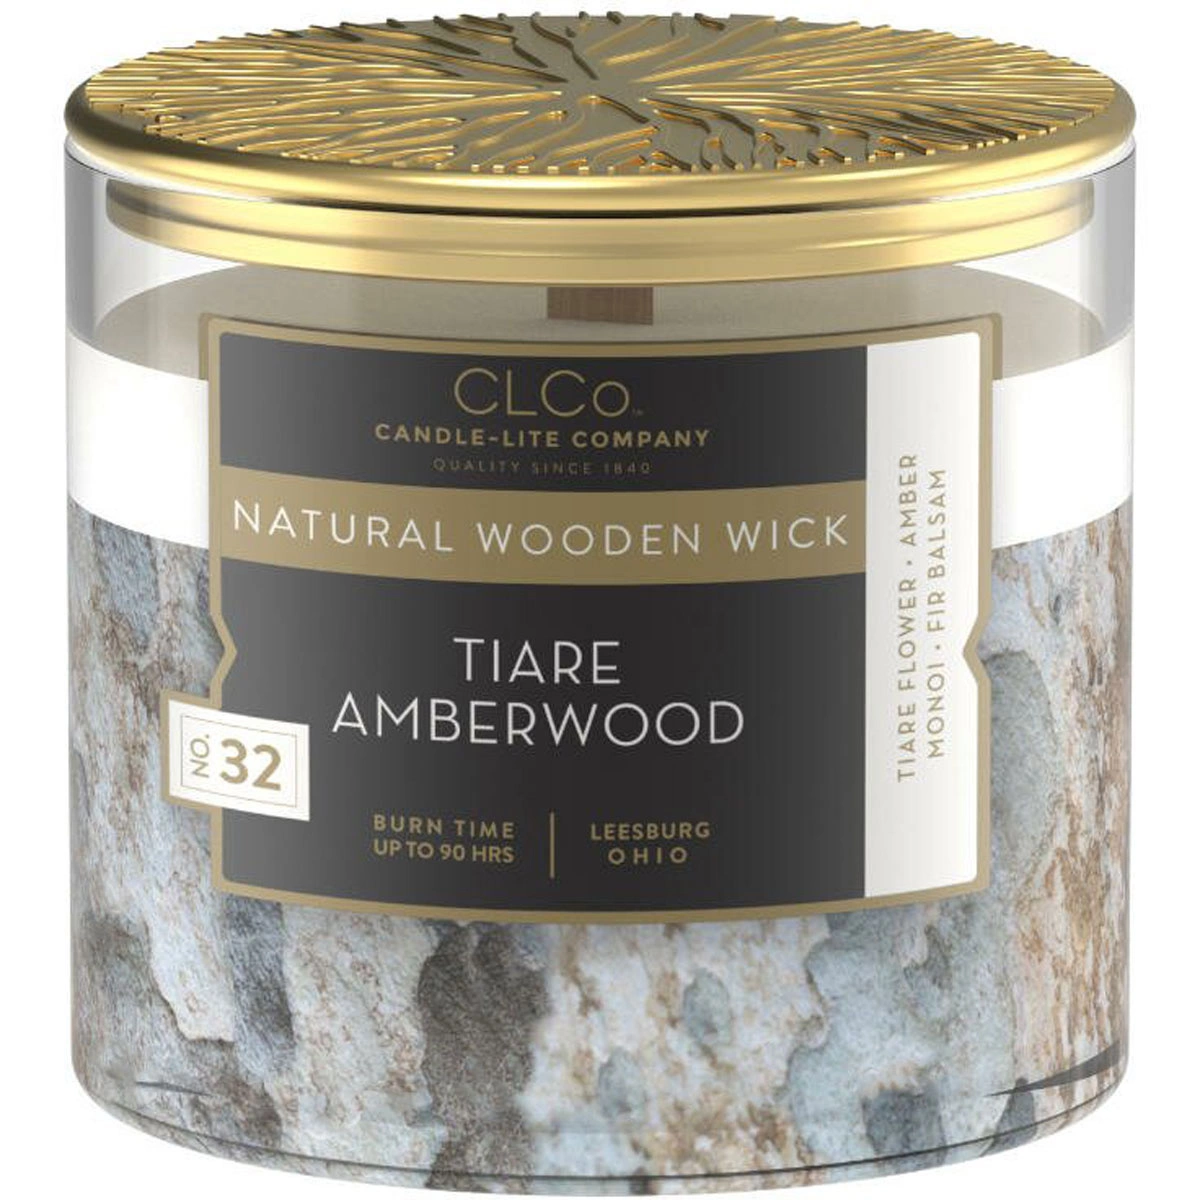 Candle-lite - Tiare Amberwood